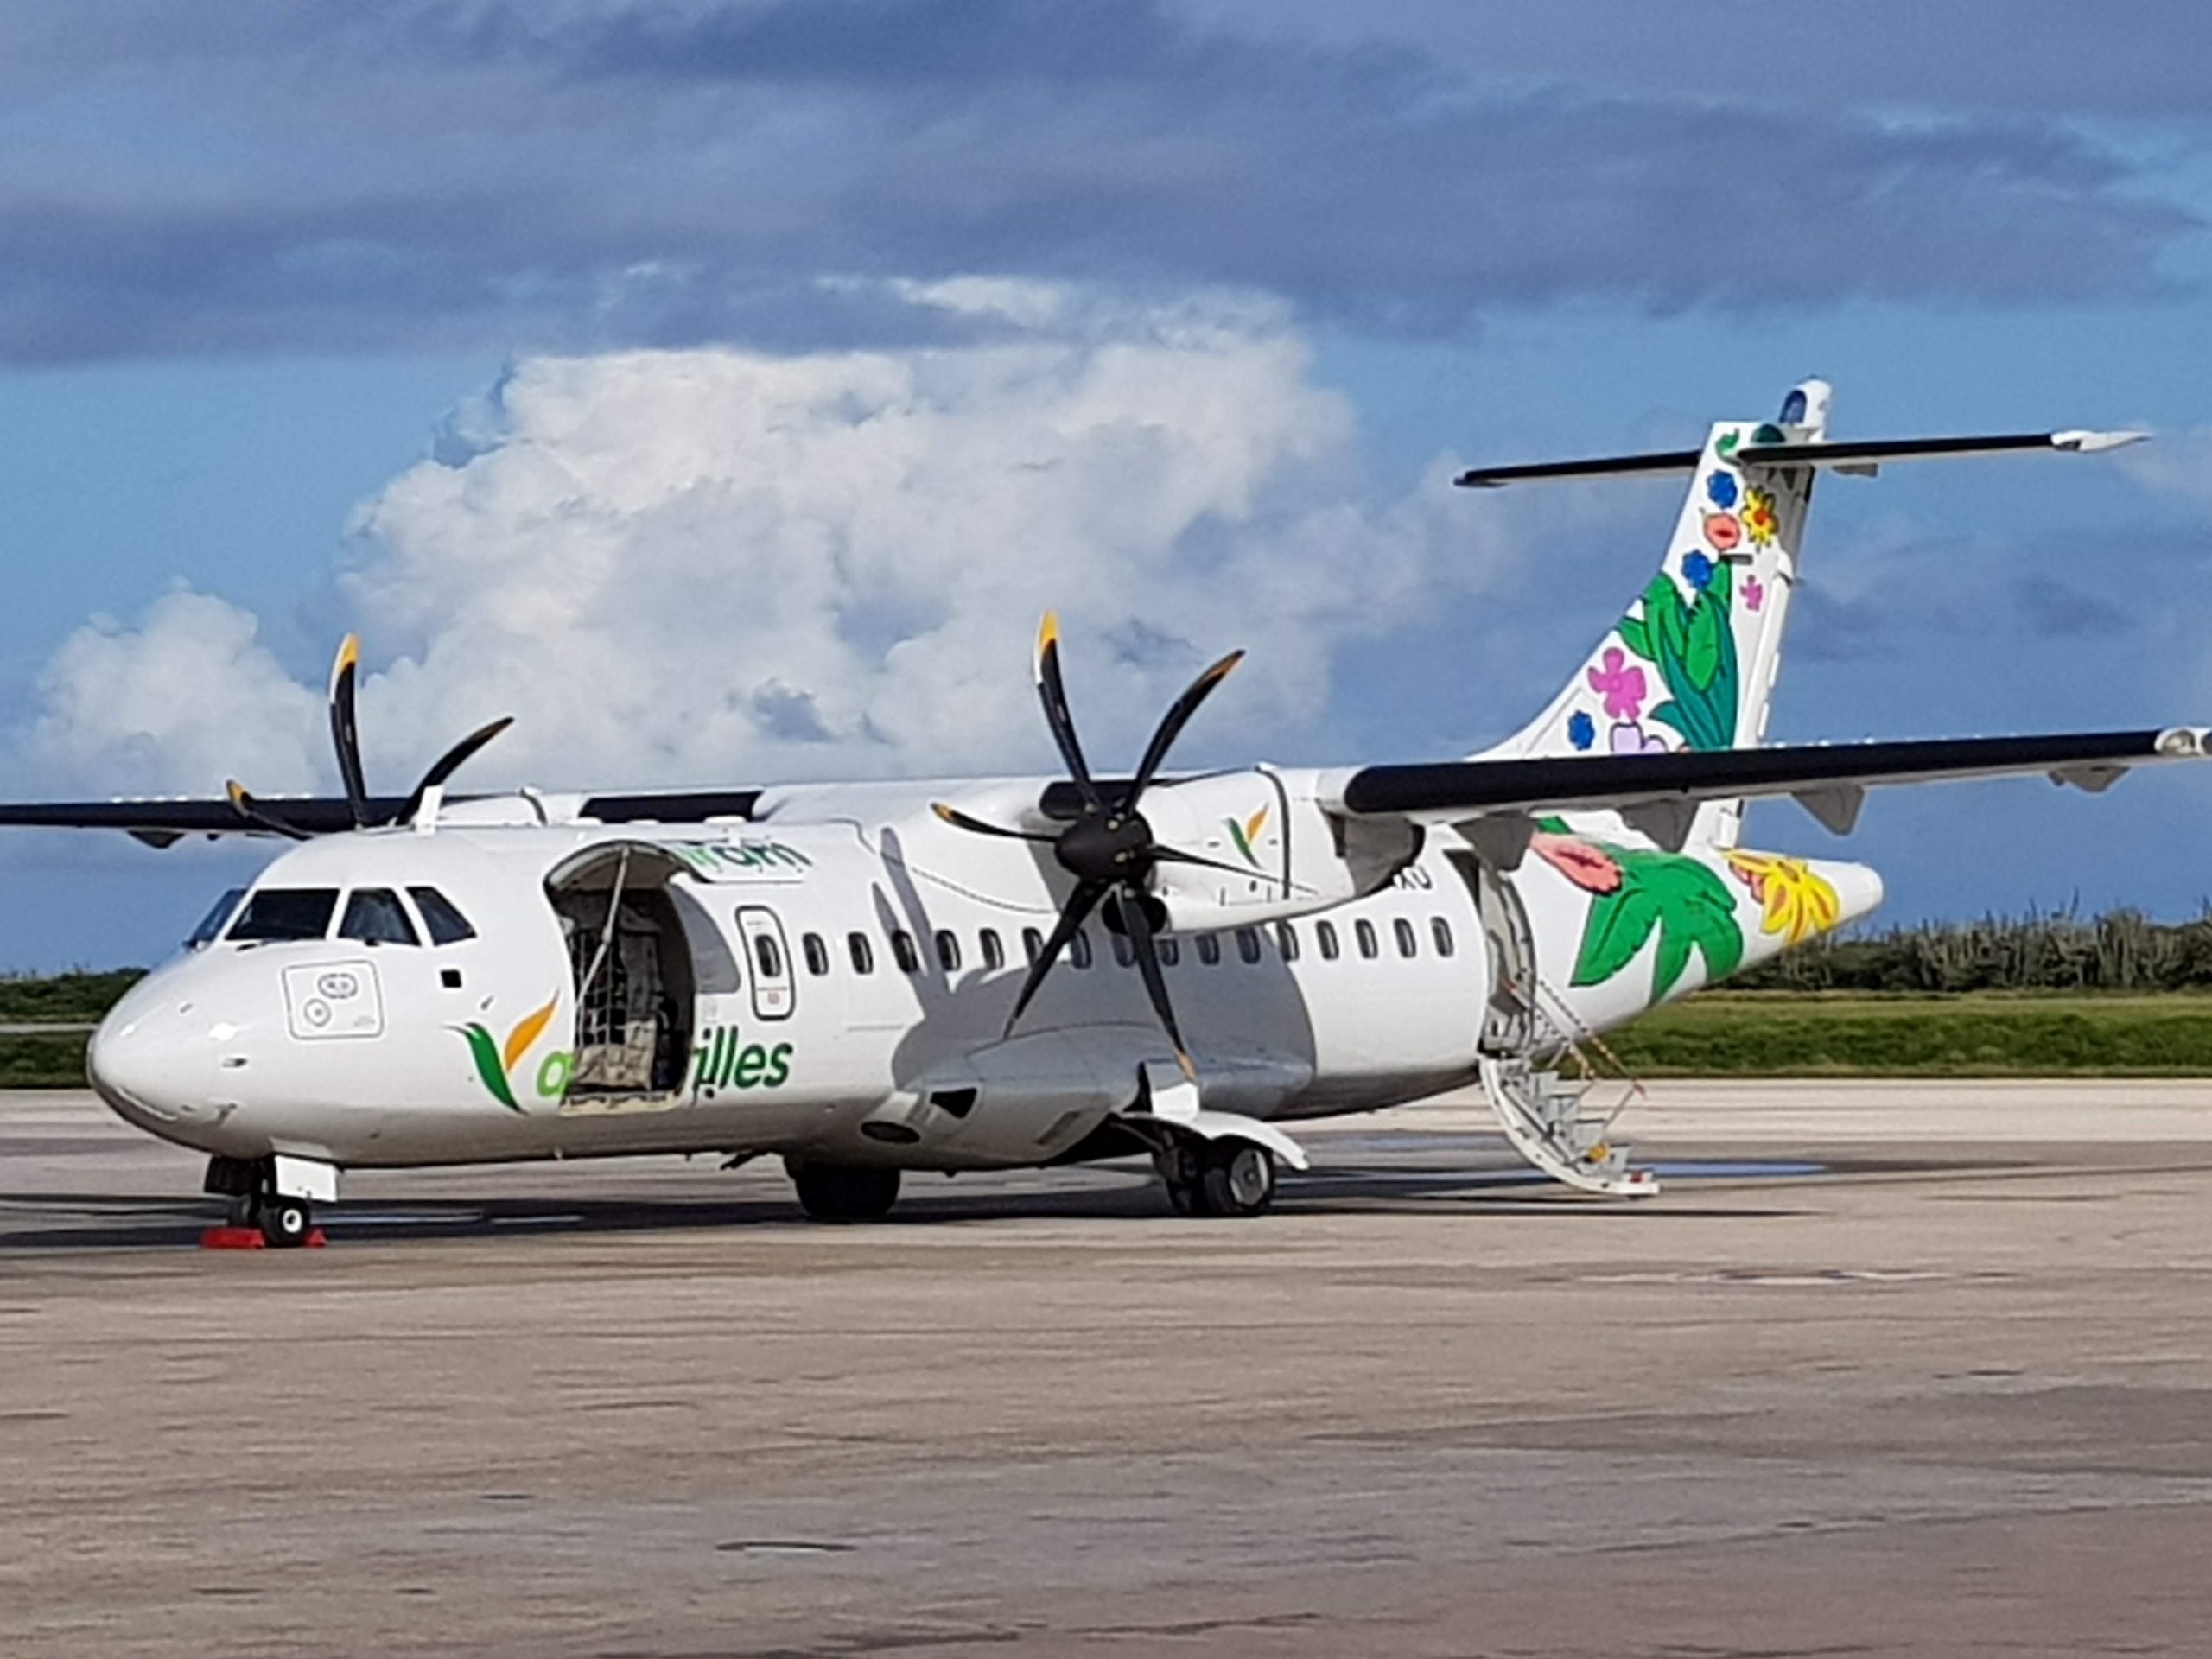 Winair Returns to Bonaire with Weekly Flight